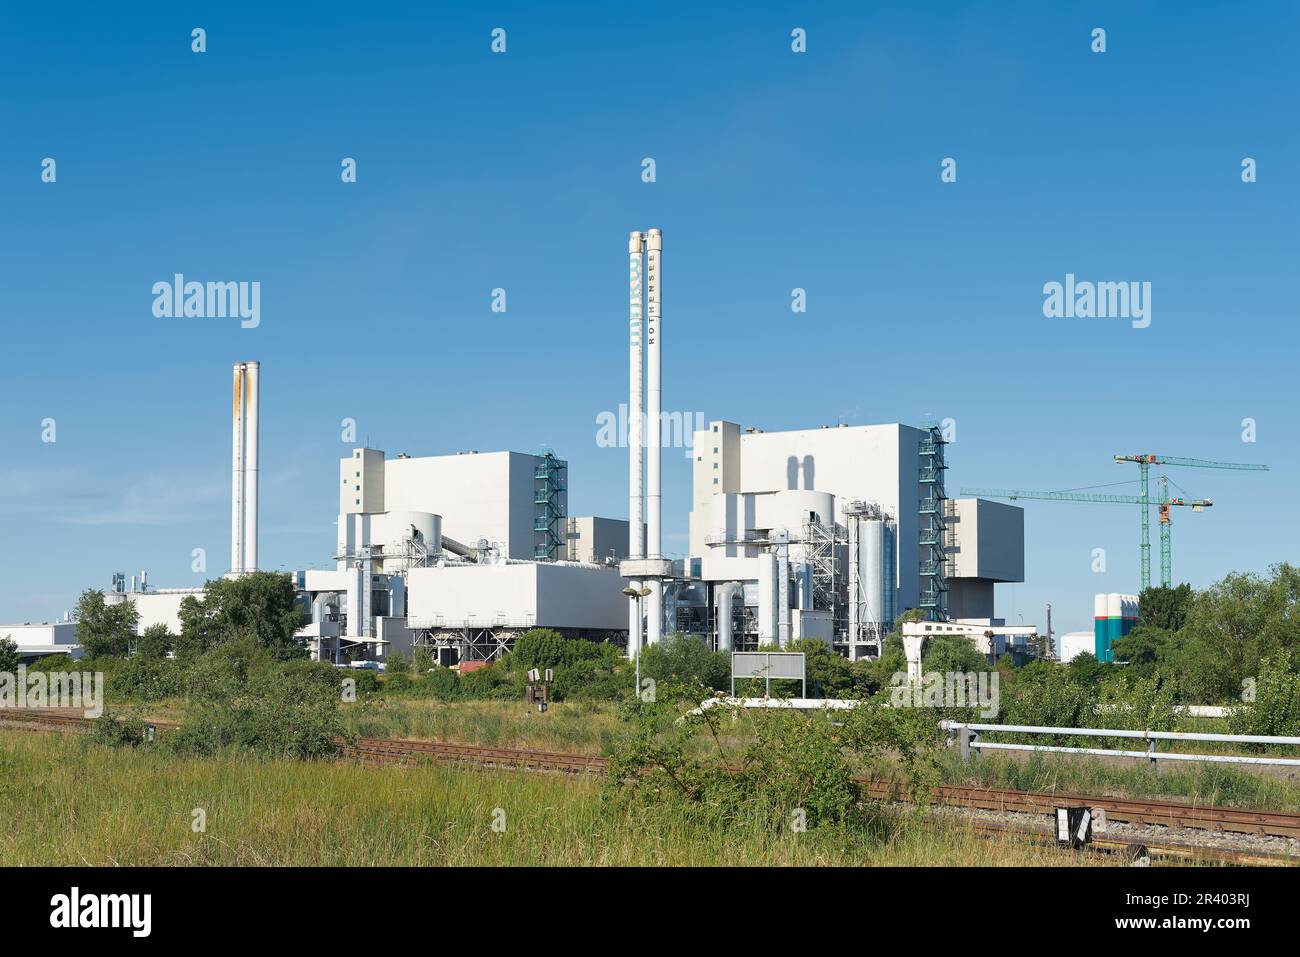 Impianto rifiuti-energia a Magdeburgo, nella zona industriale Rothensee Foto Stock